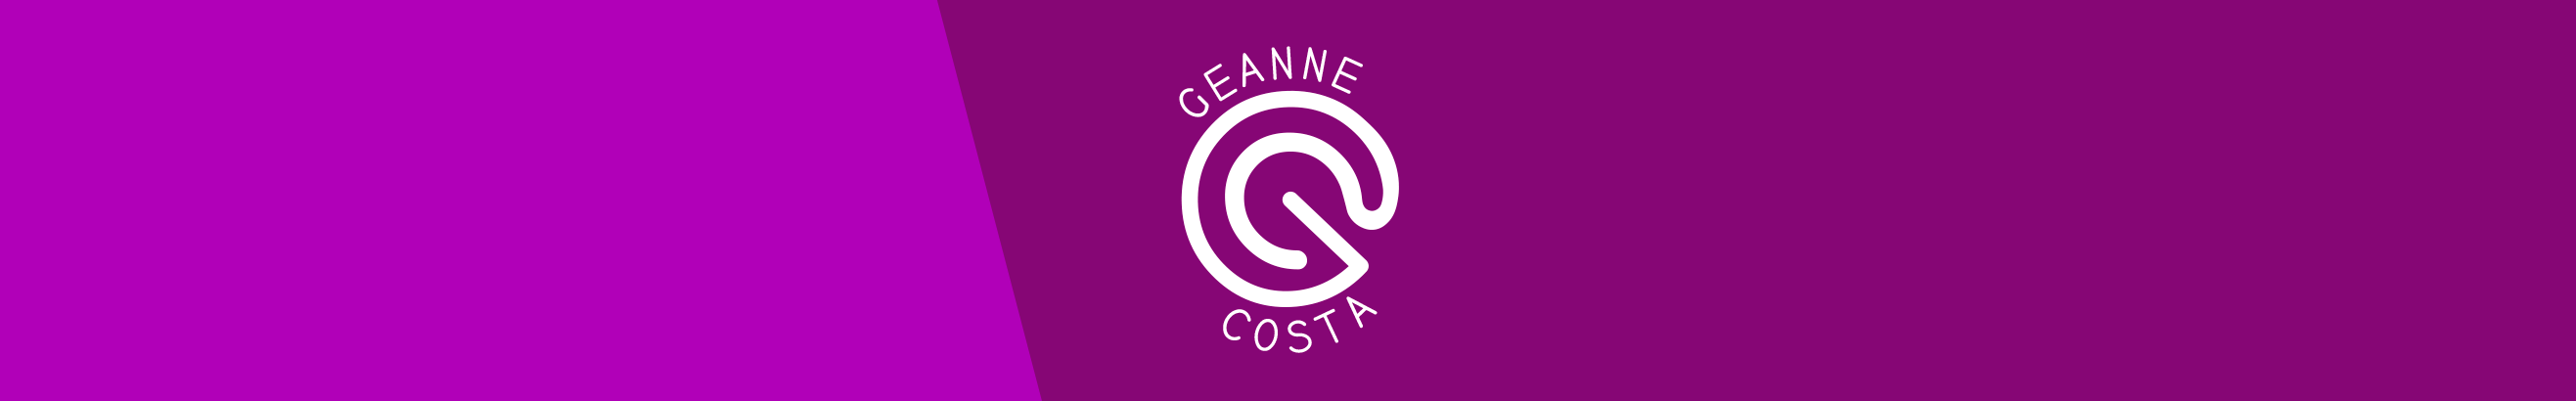 Geanne Costa's profile banner